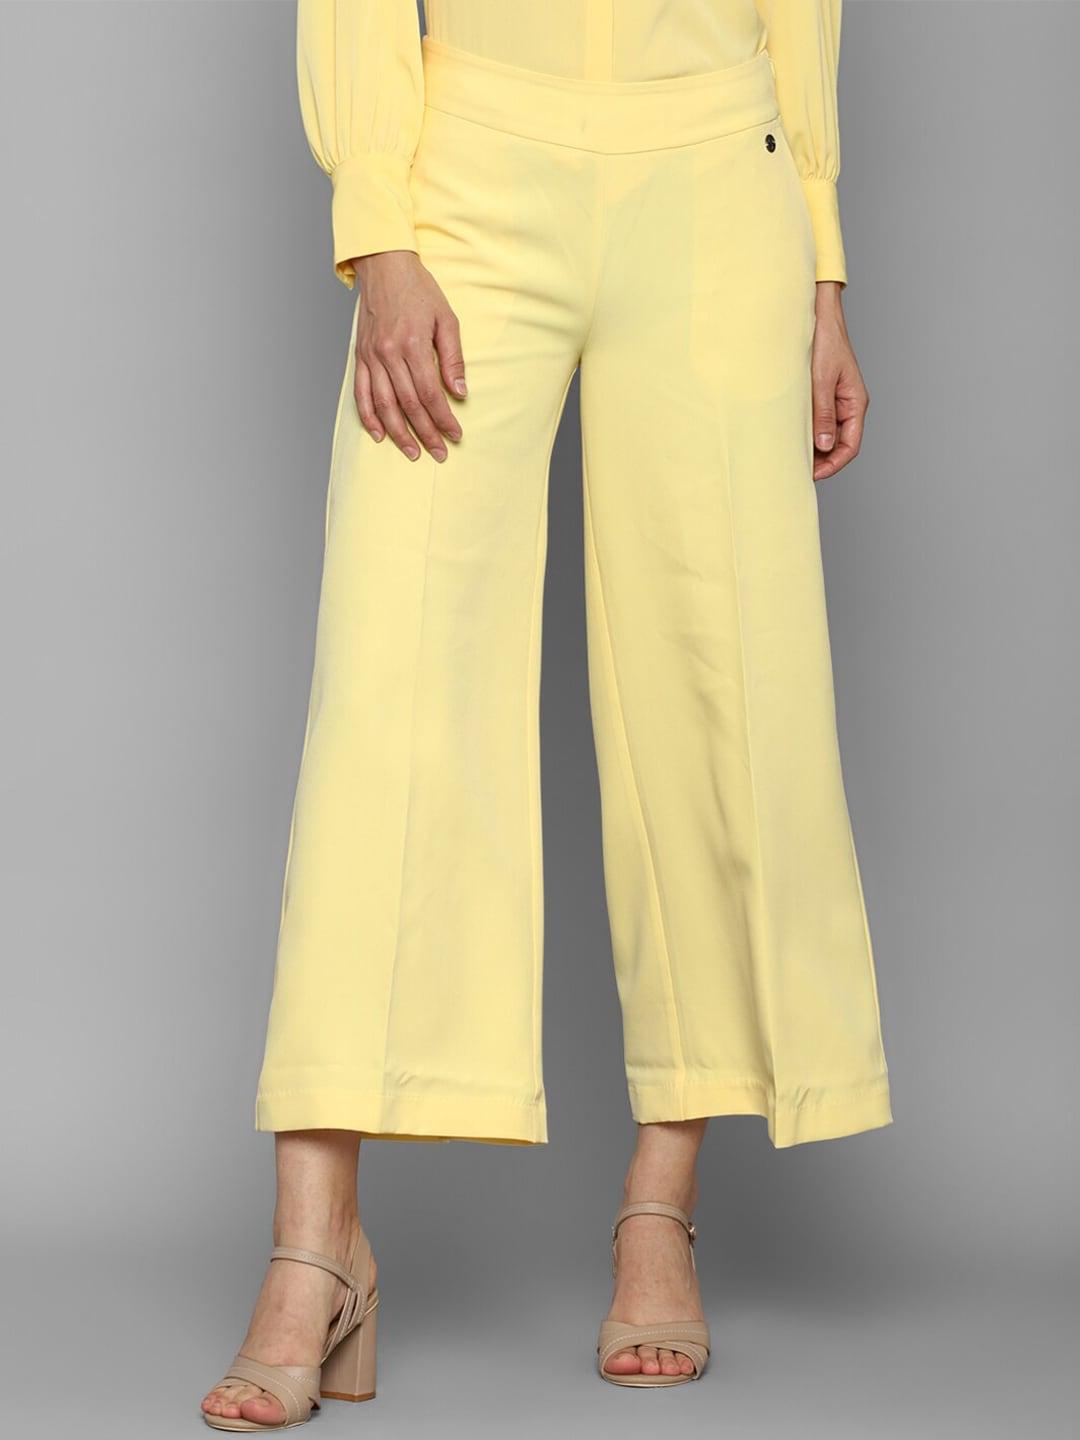 allen solly woman women yellow culottes trousers